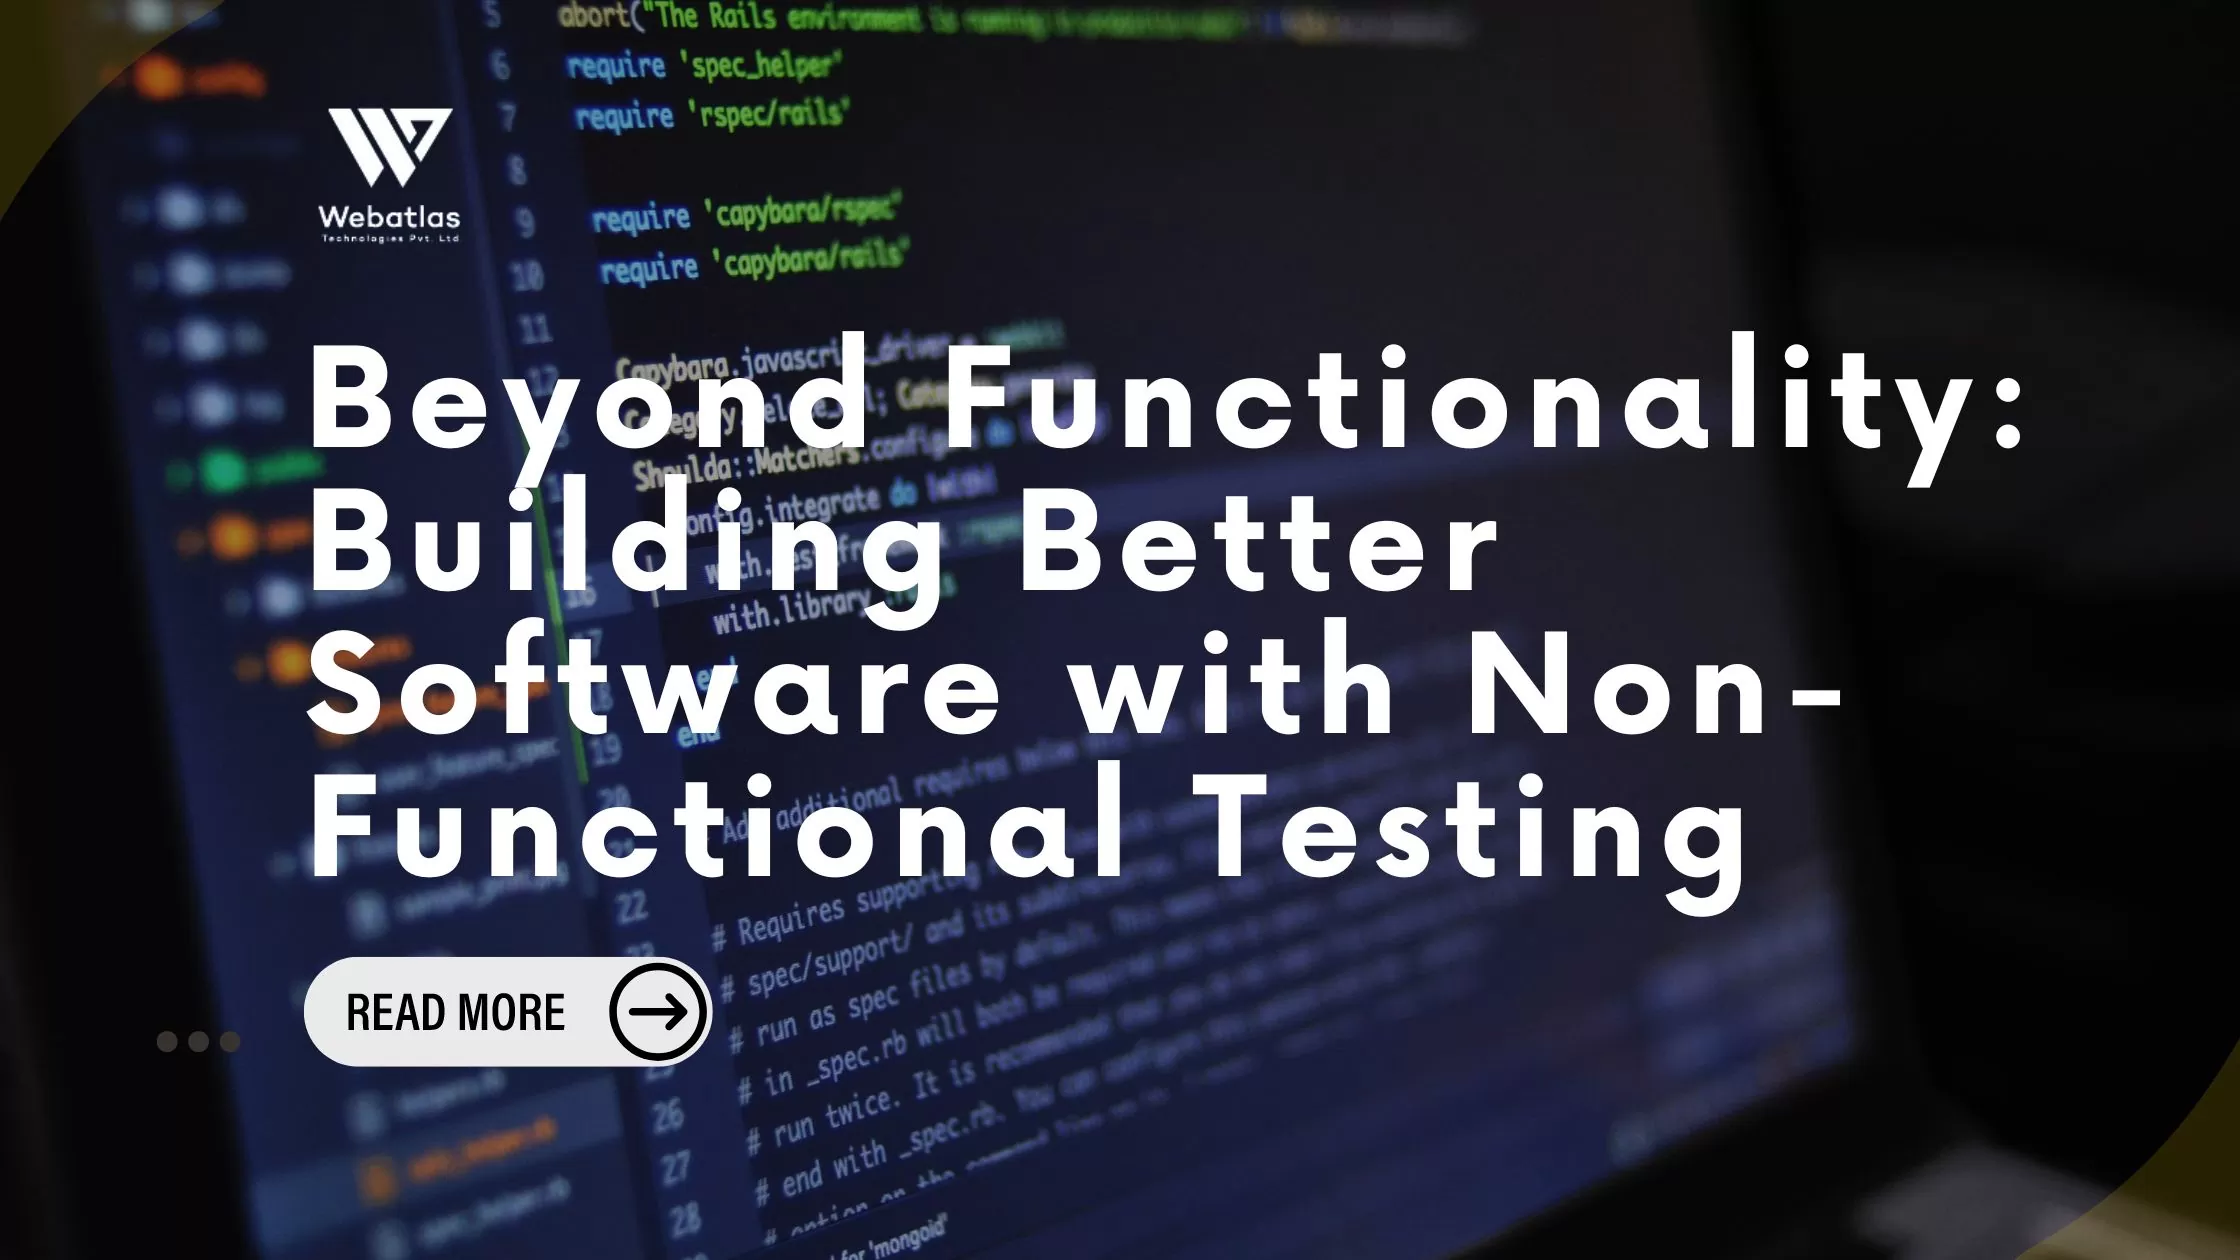 non functional testing